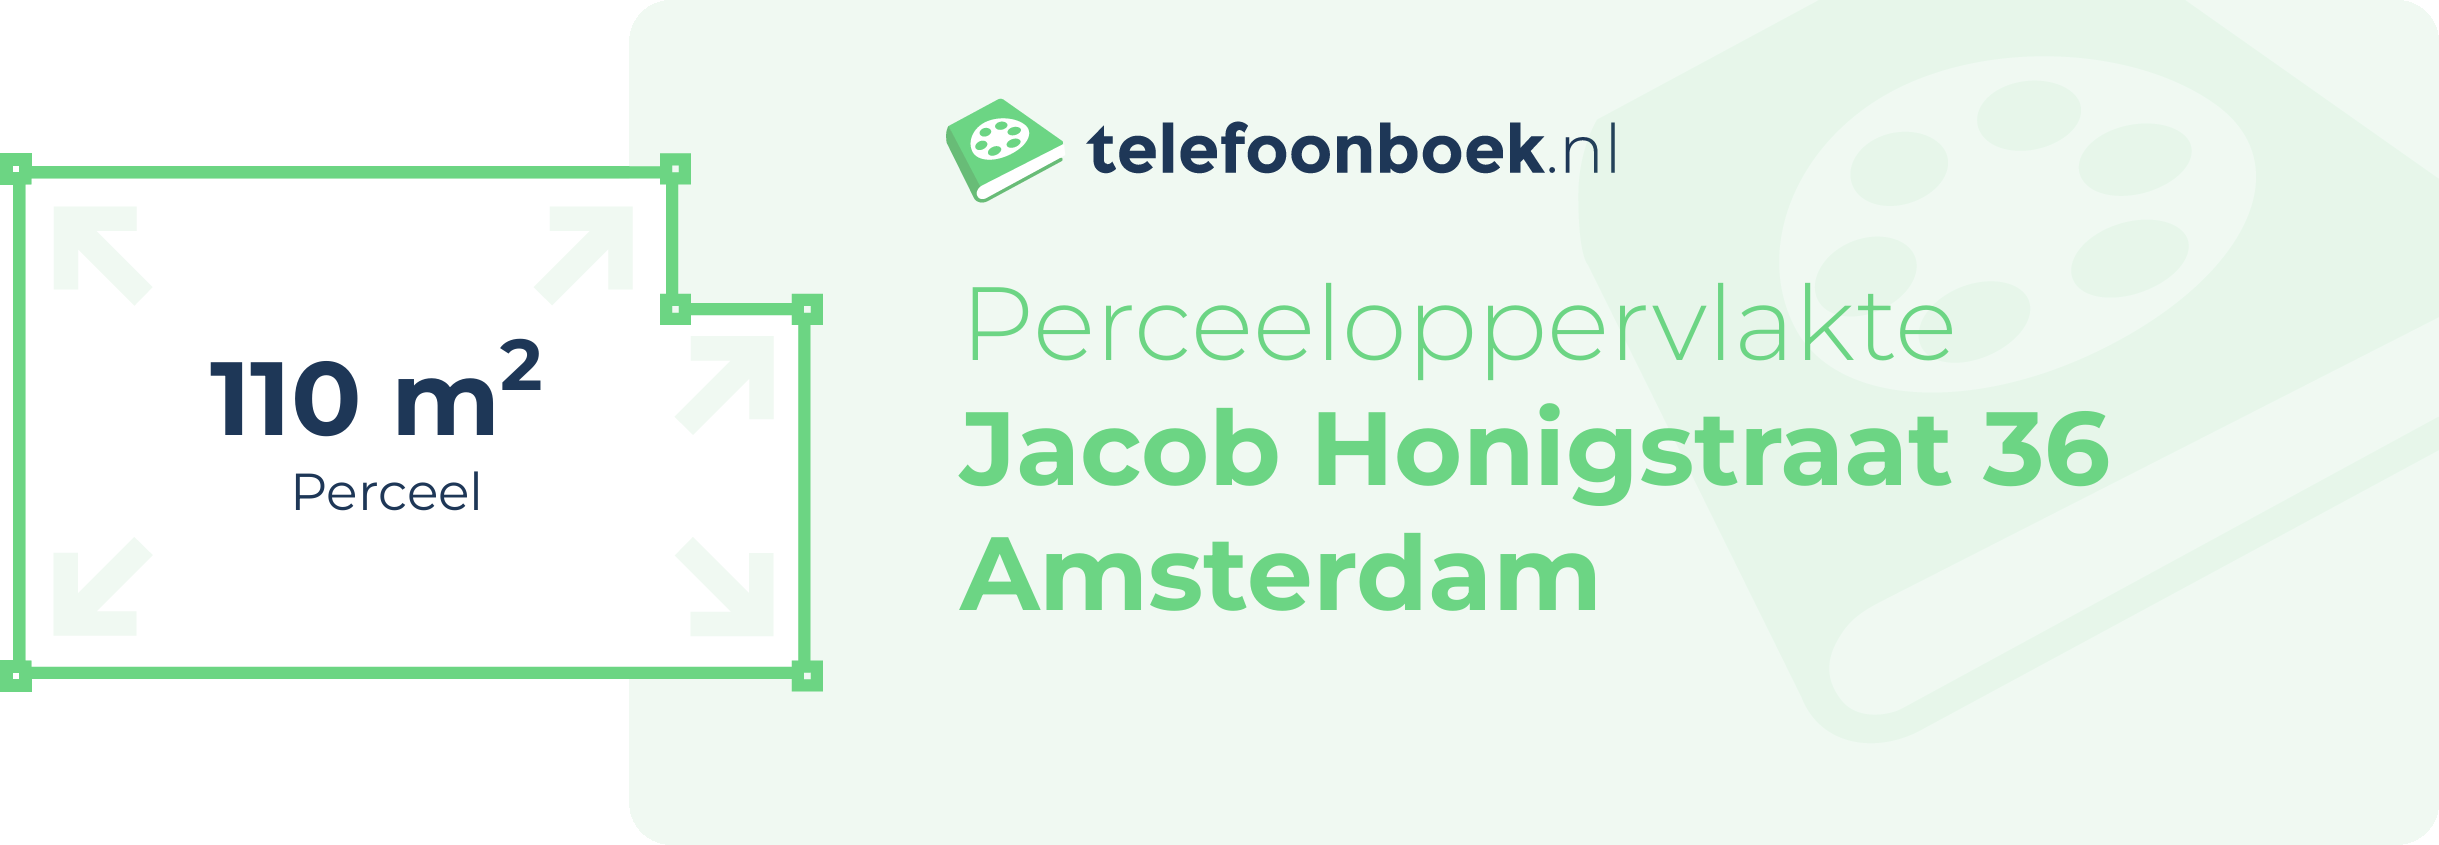 Perceeloppervlakte Jacob Honigstraat 36 Amsterdam